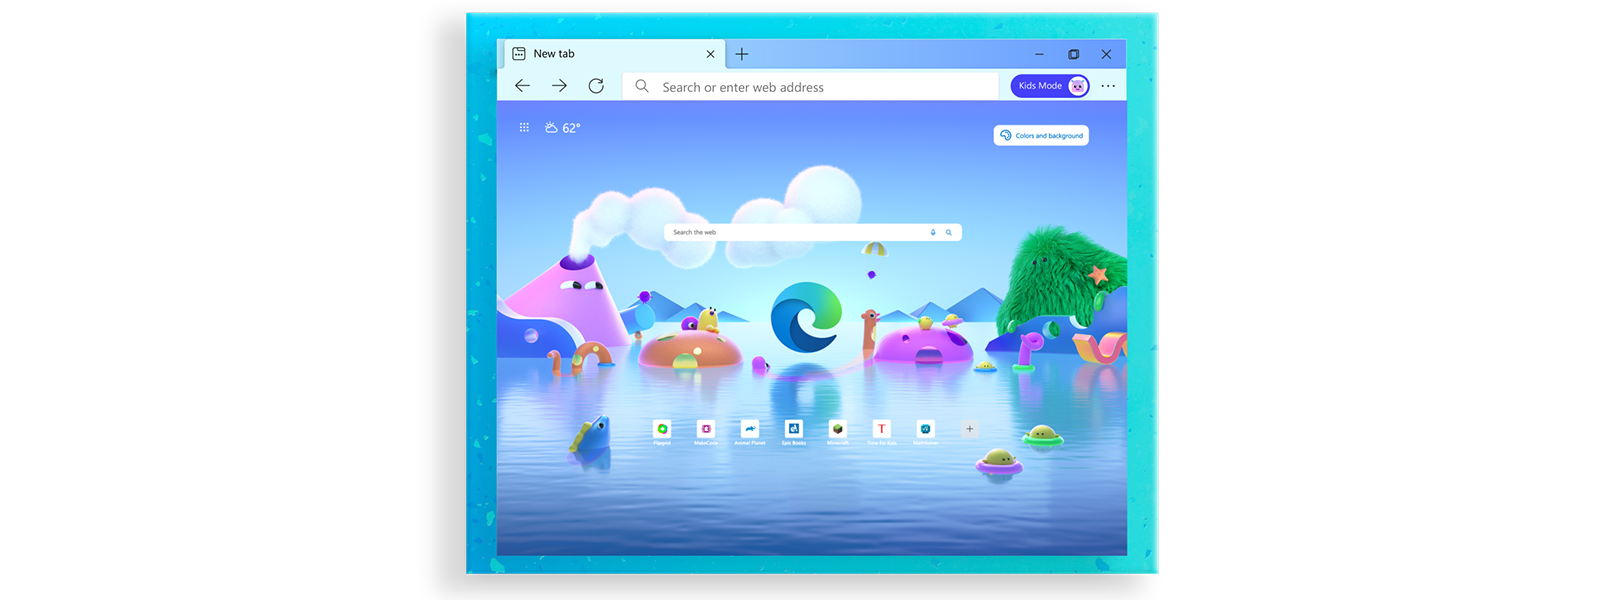 Microsoft Edge 浏览器主屏幕显示儿童模式的各种卡通形象